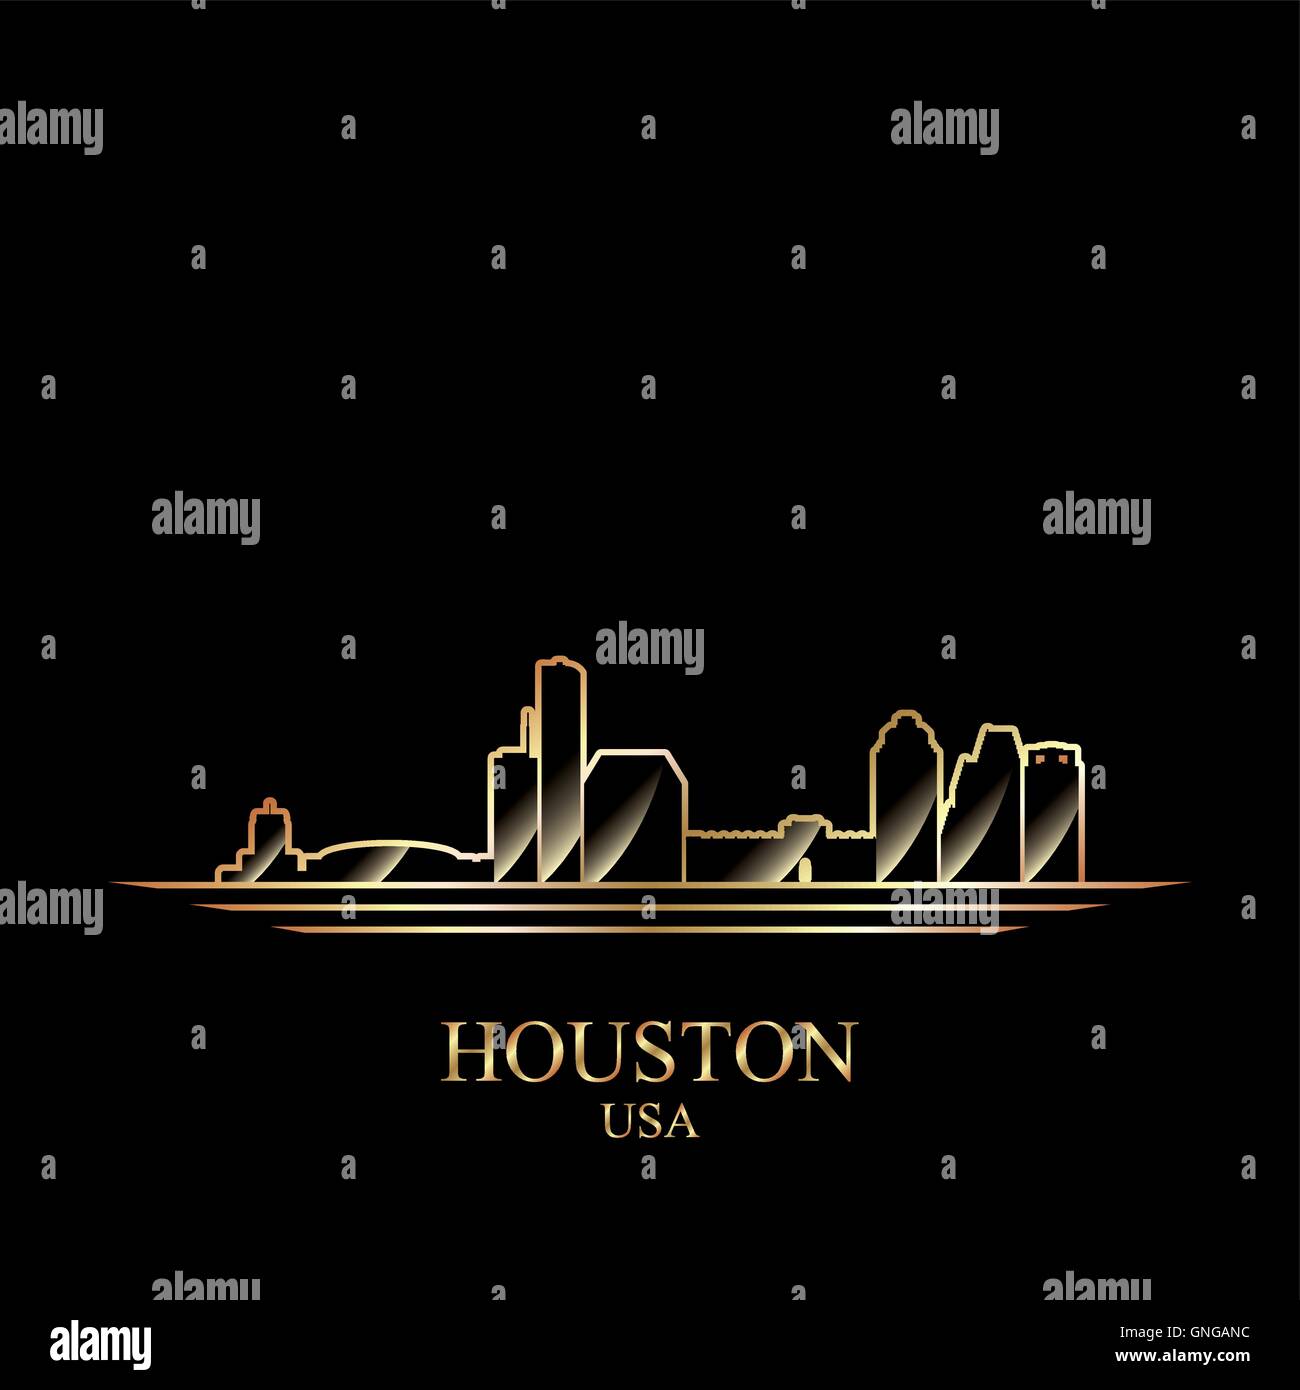 2,788 Houston Silhouette Images, Stock Photos, 3D objects, & Vectors